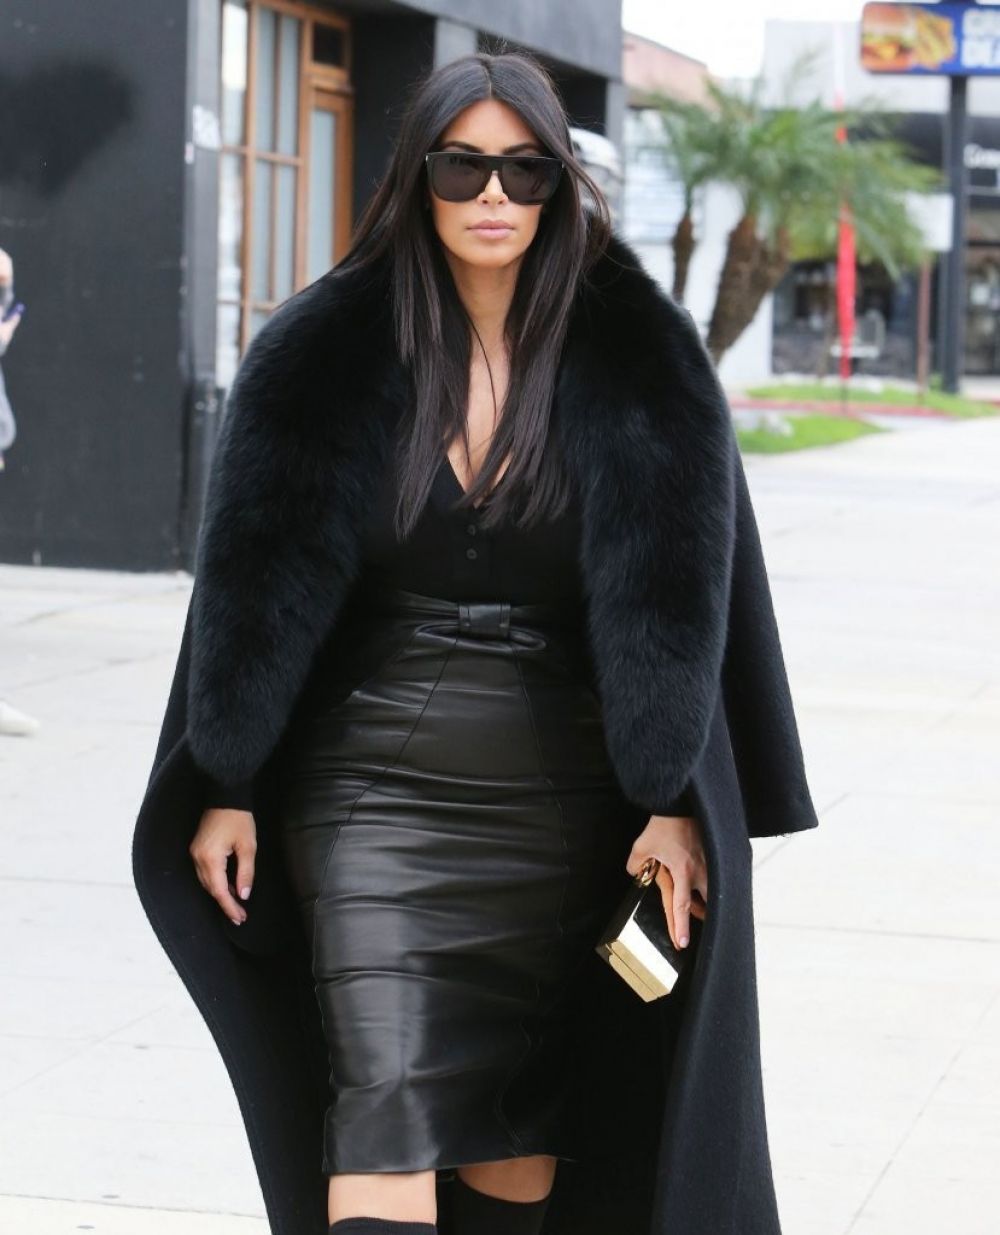 kim-kardashian-arrives-at-a-sporting-store-in-los-angeles_10.jpg